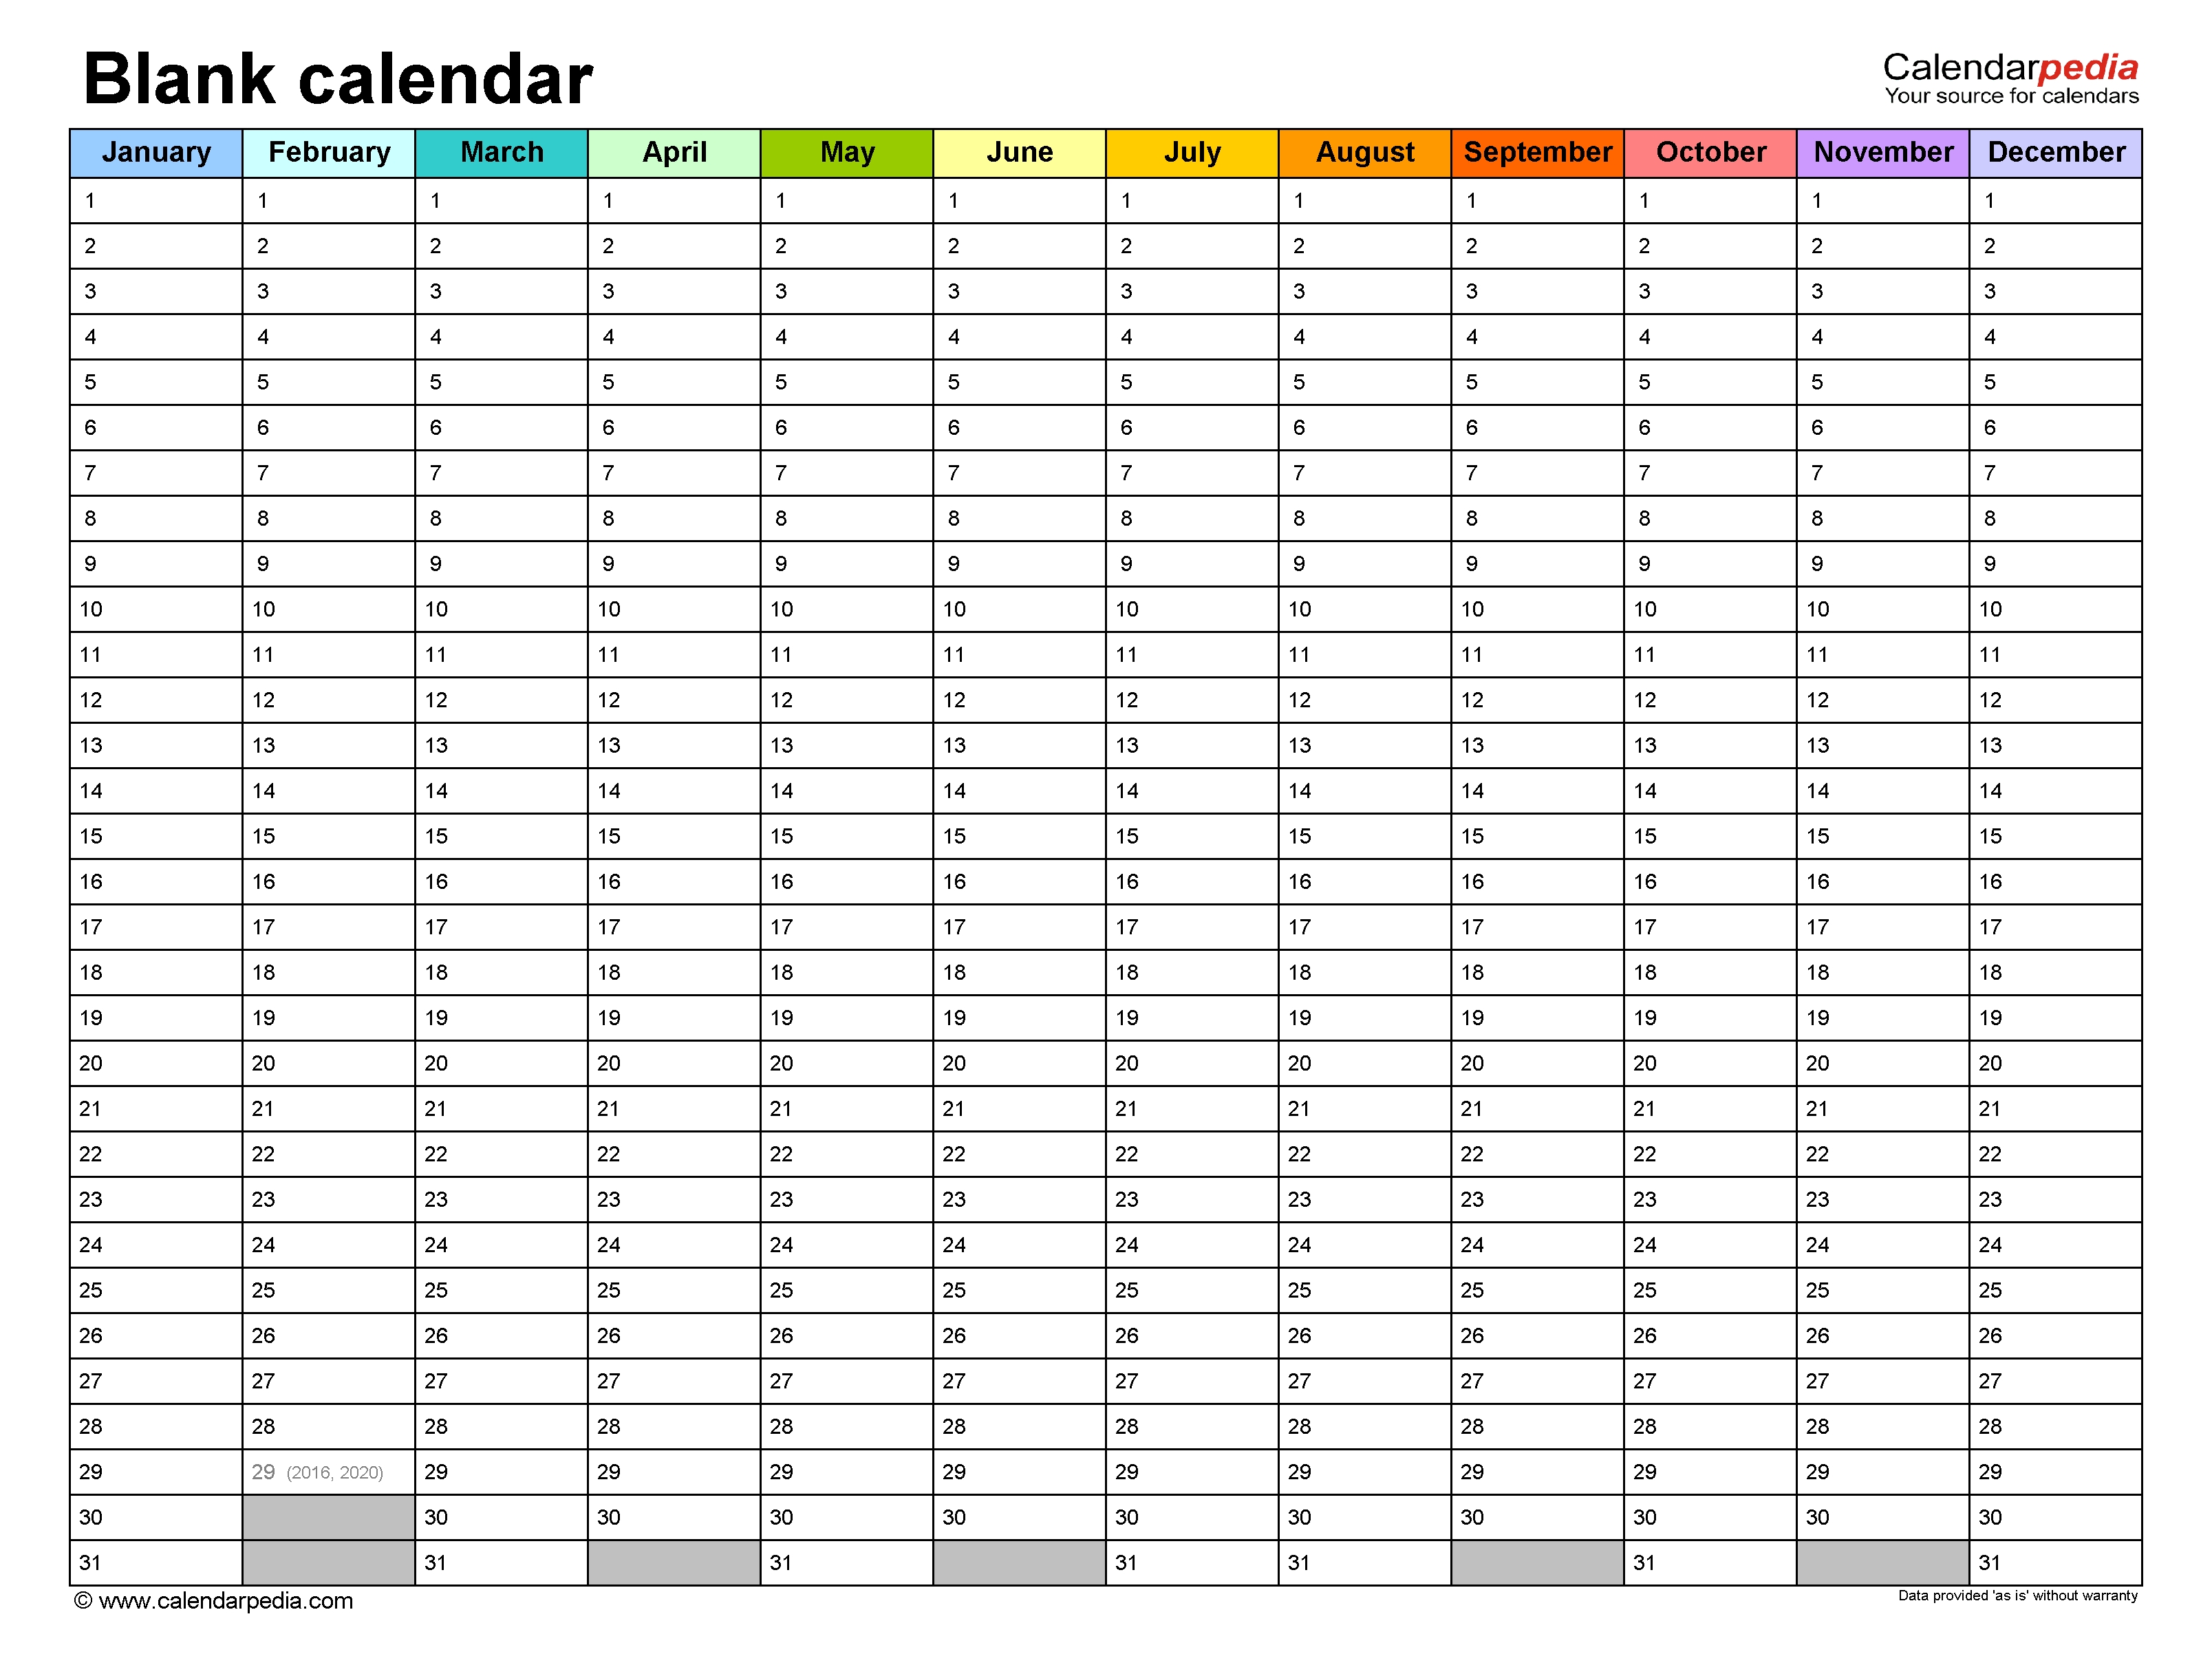 Blank Calendars - Free Printable Microsoft Word Templates-Blank Calendar Template Countdown